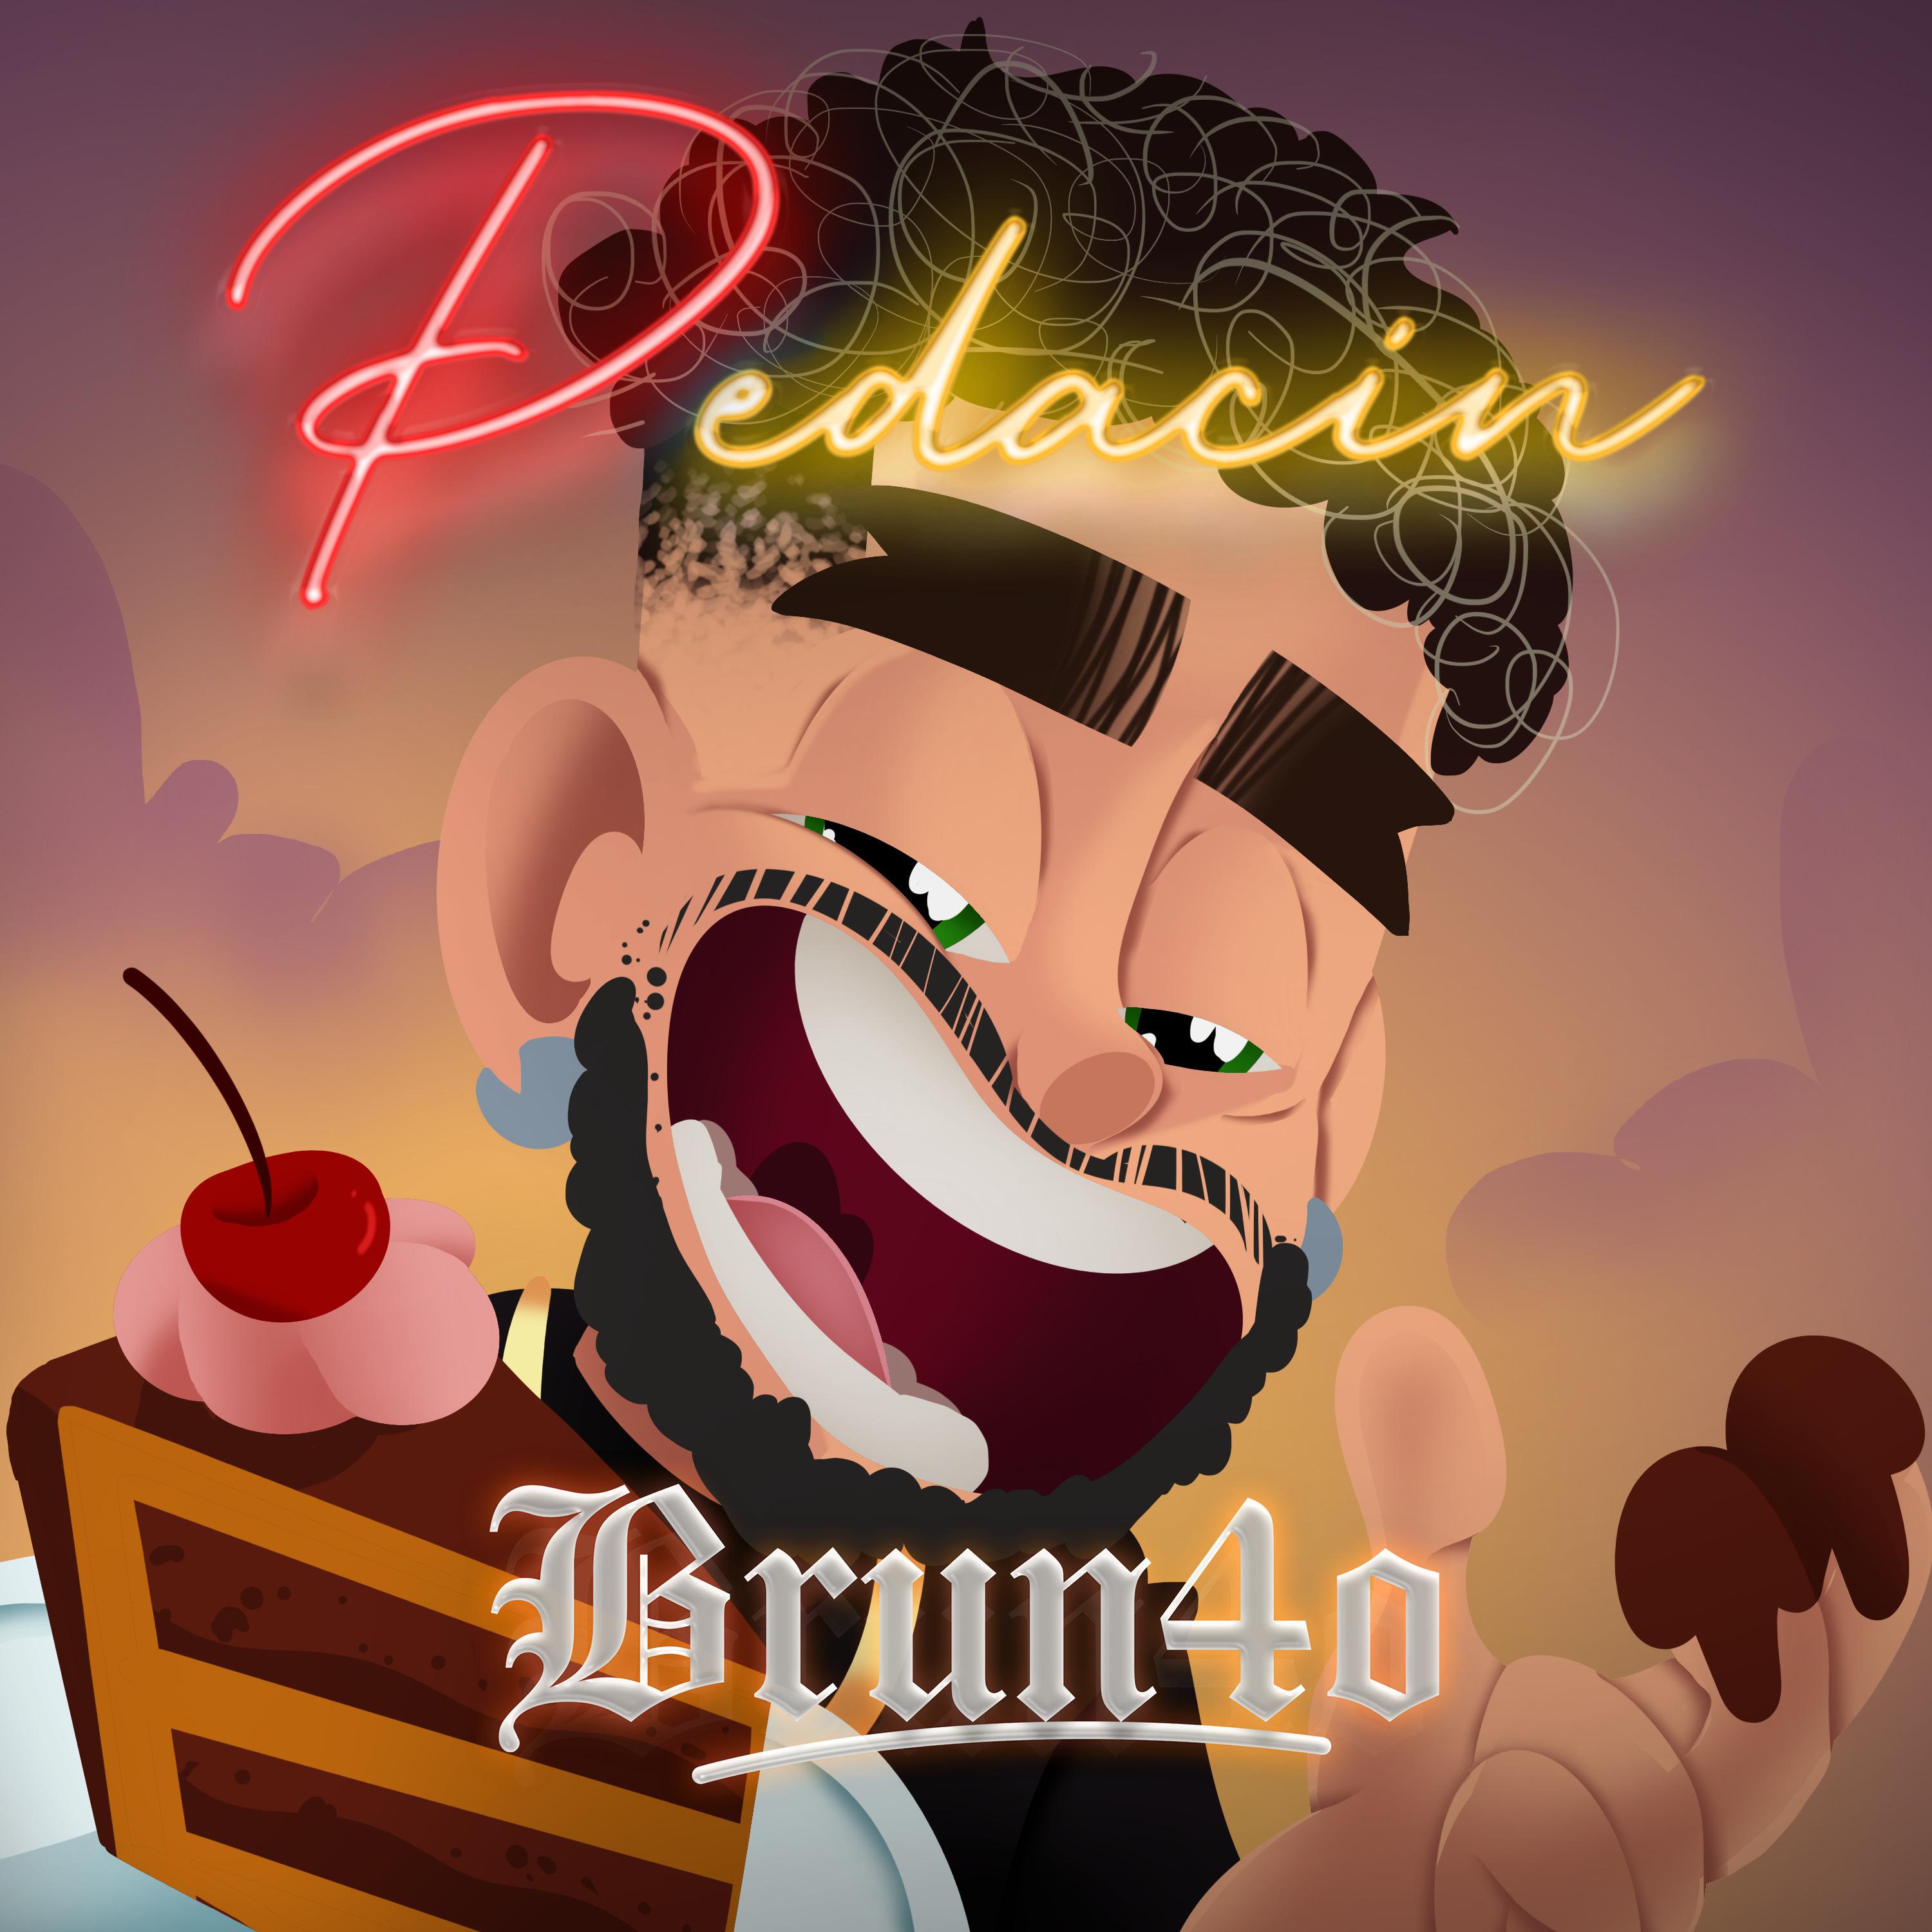 Brun4o - Pedacin